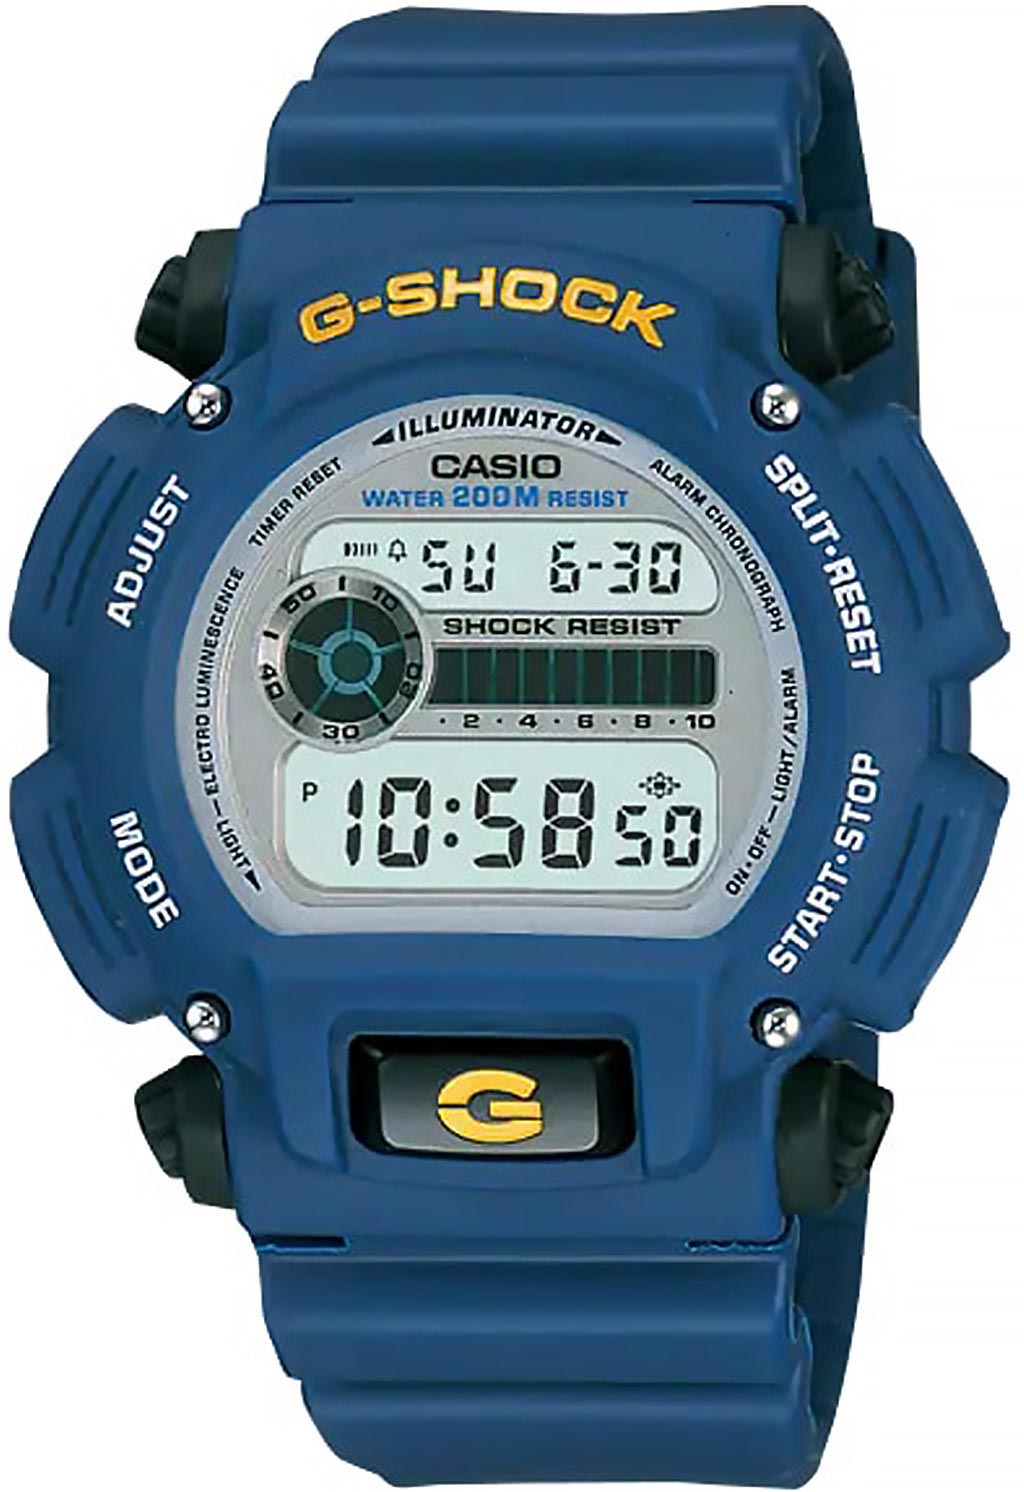    Casio G-SHOCK DW-9052-2V